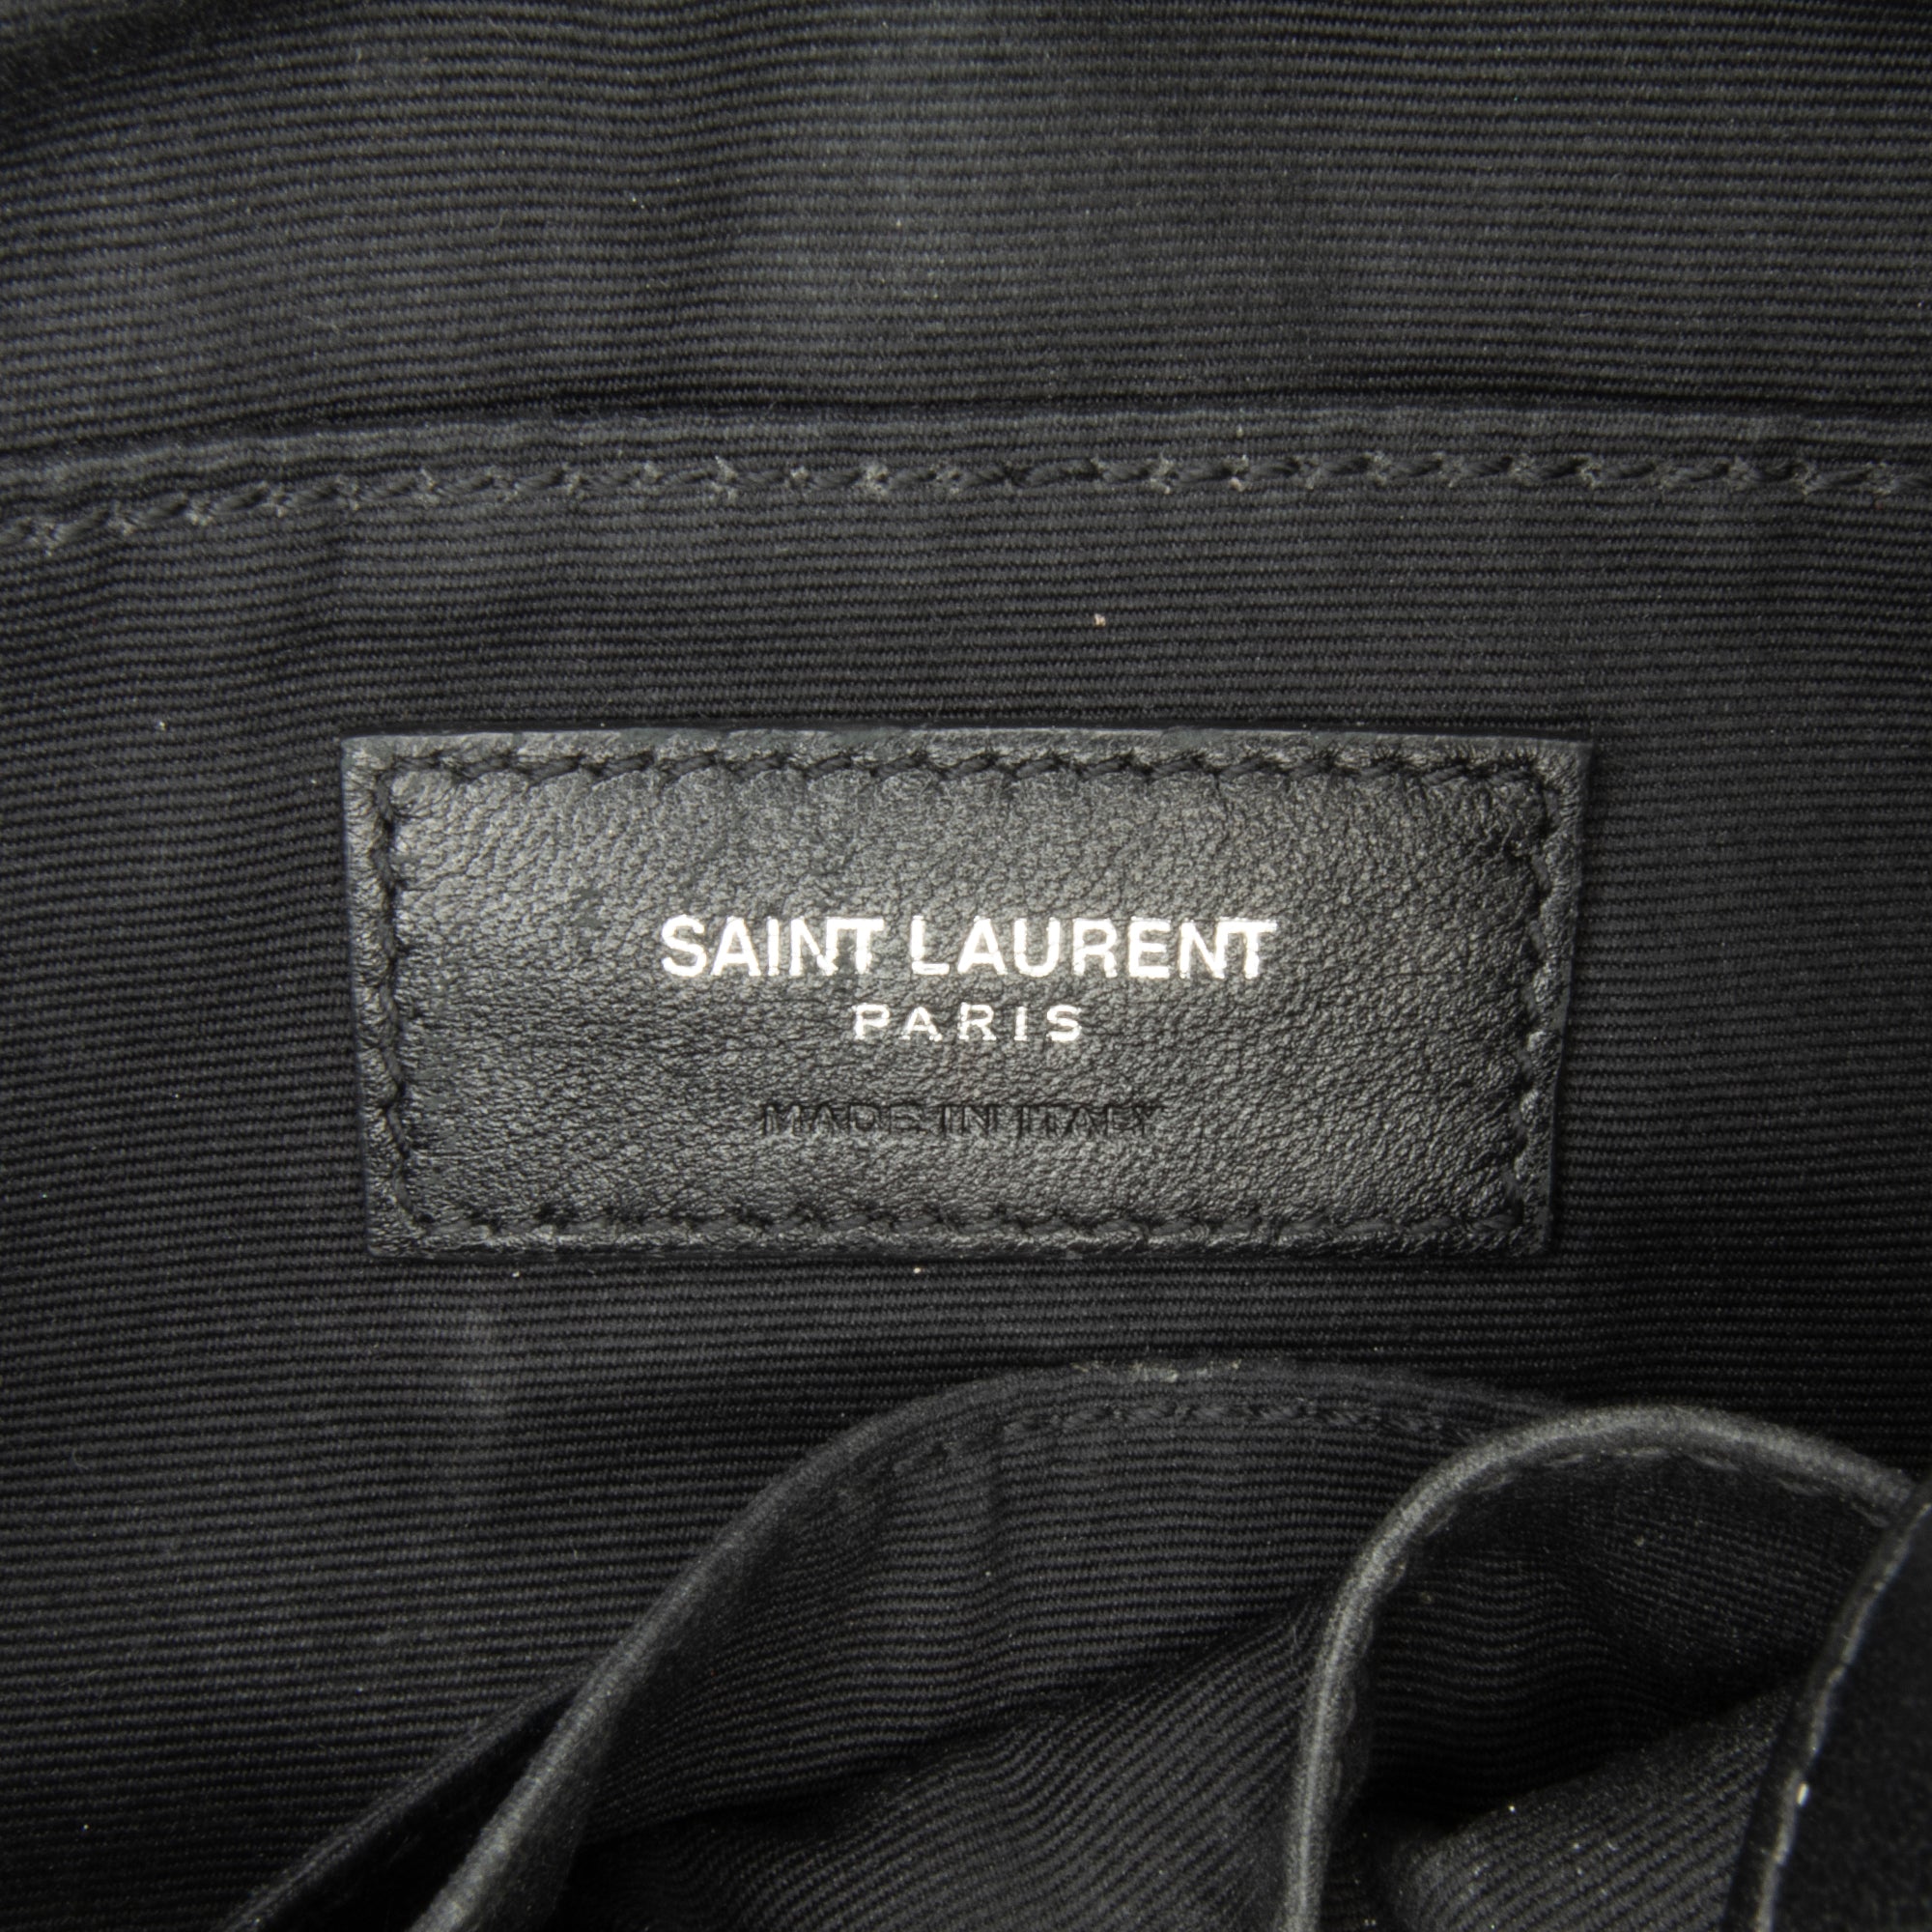 Yves Saint Laurent Monogram Lou Belt Bag Black Studded Matelassé